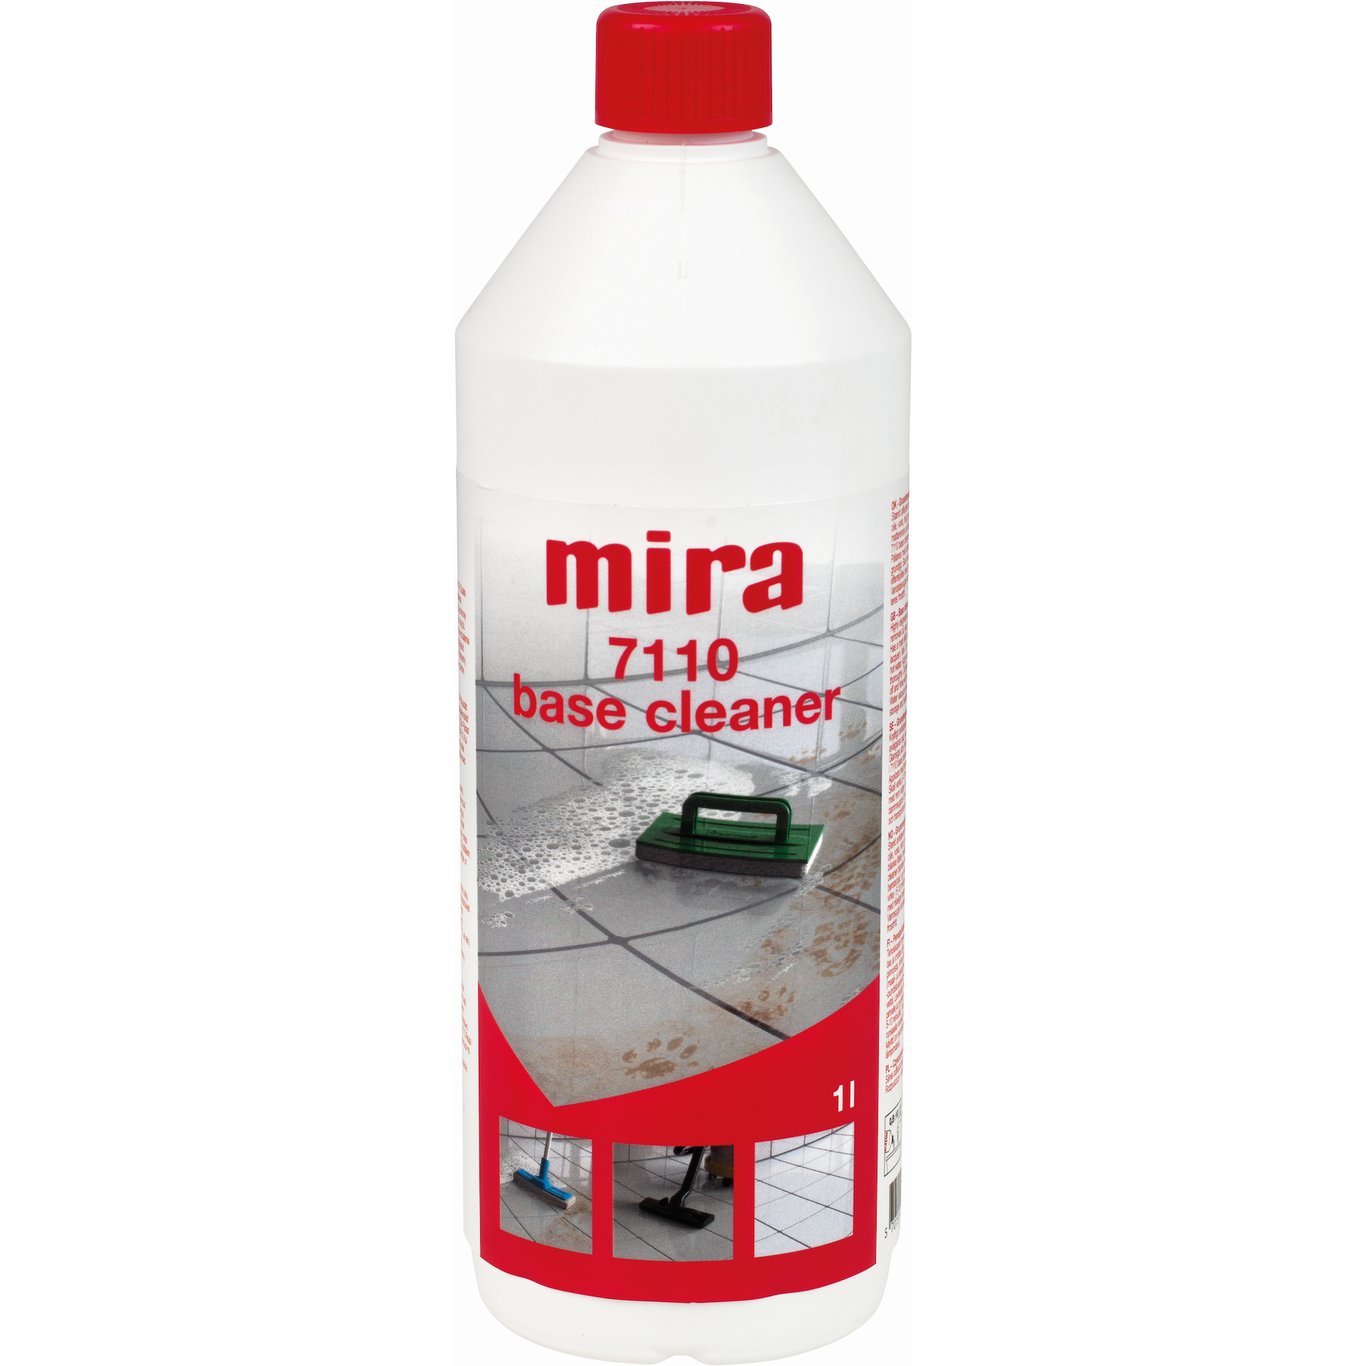 MIRA 7110 BASE CLEANER